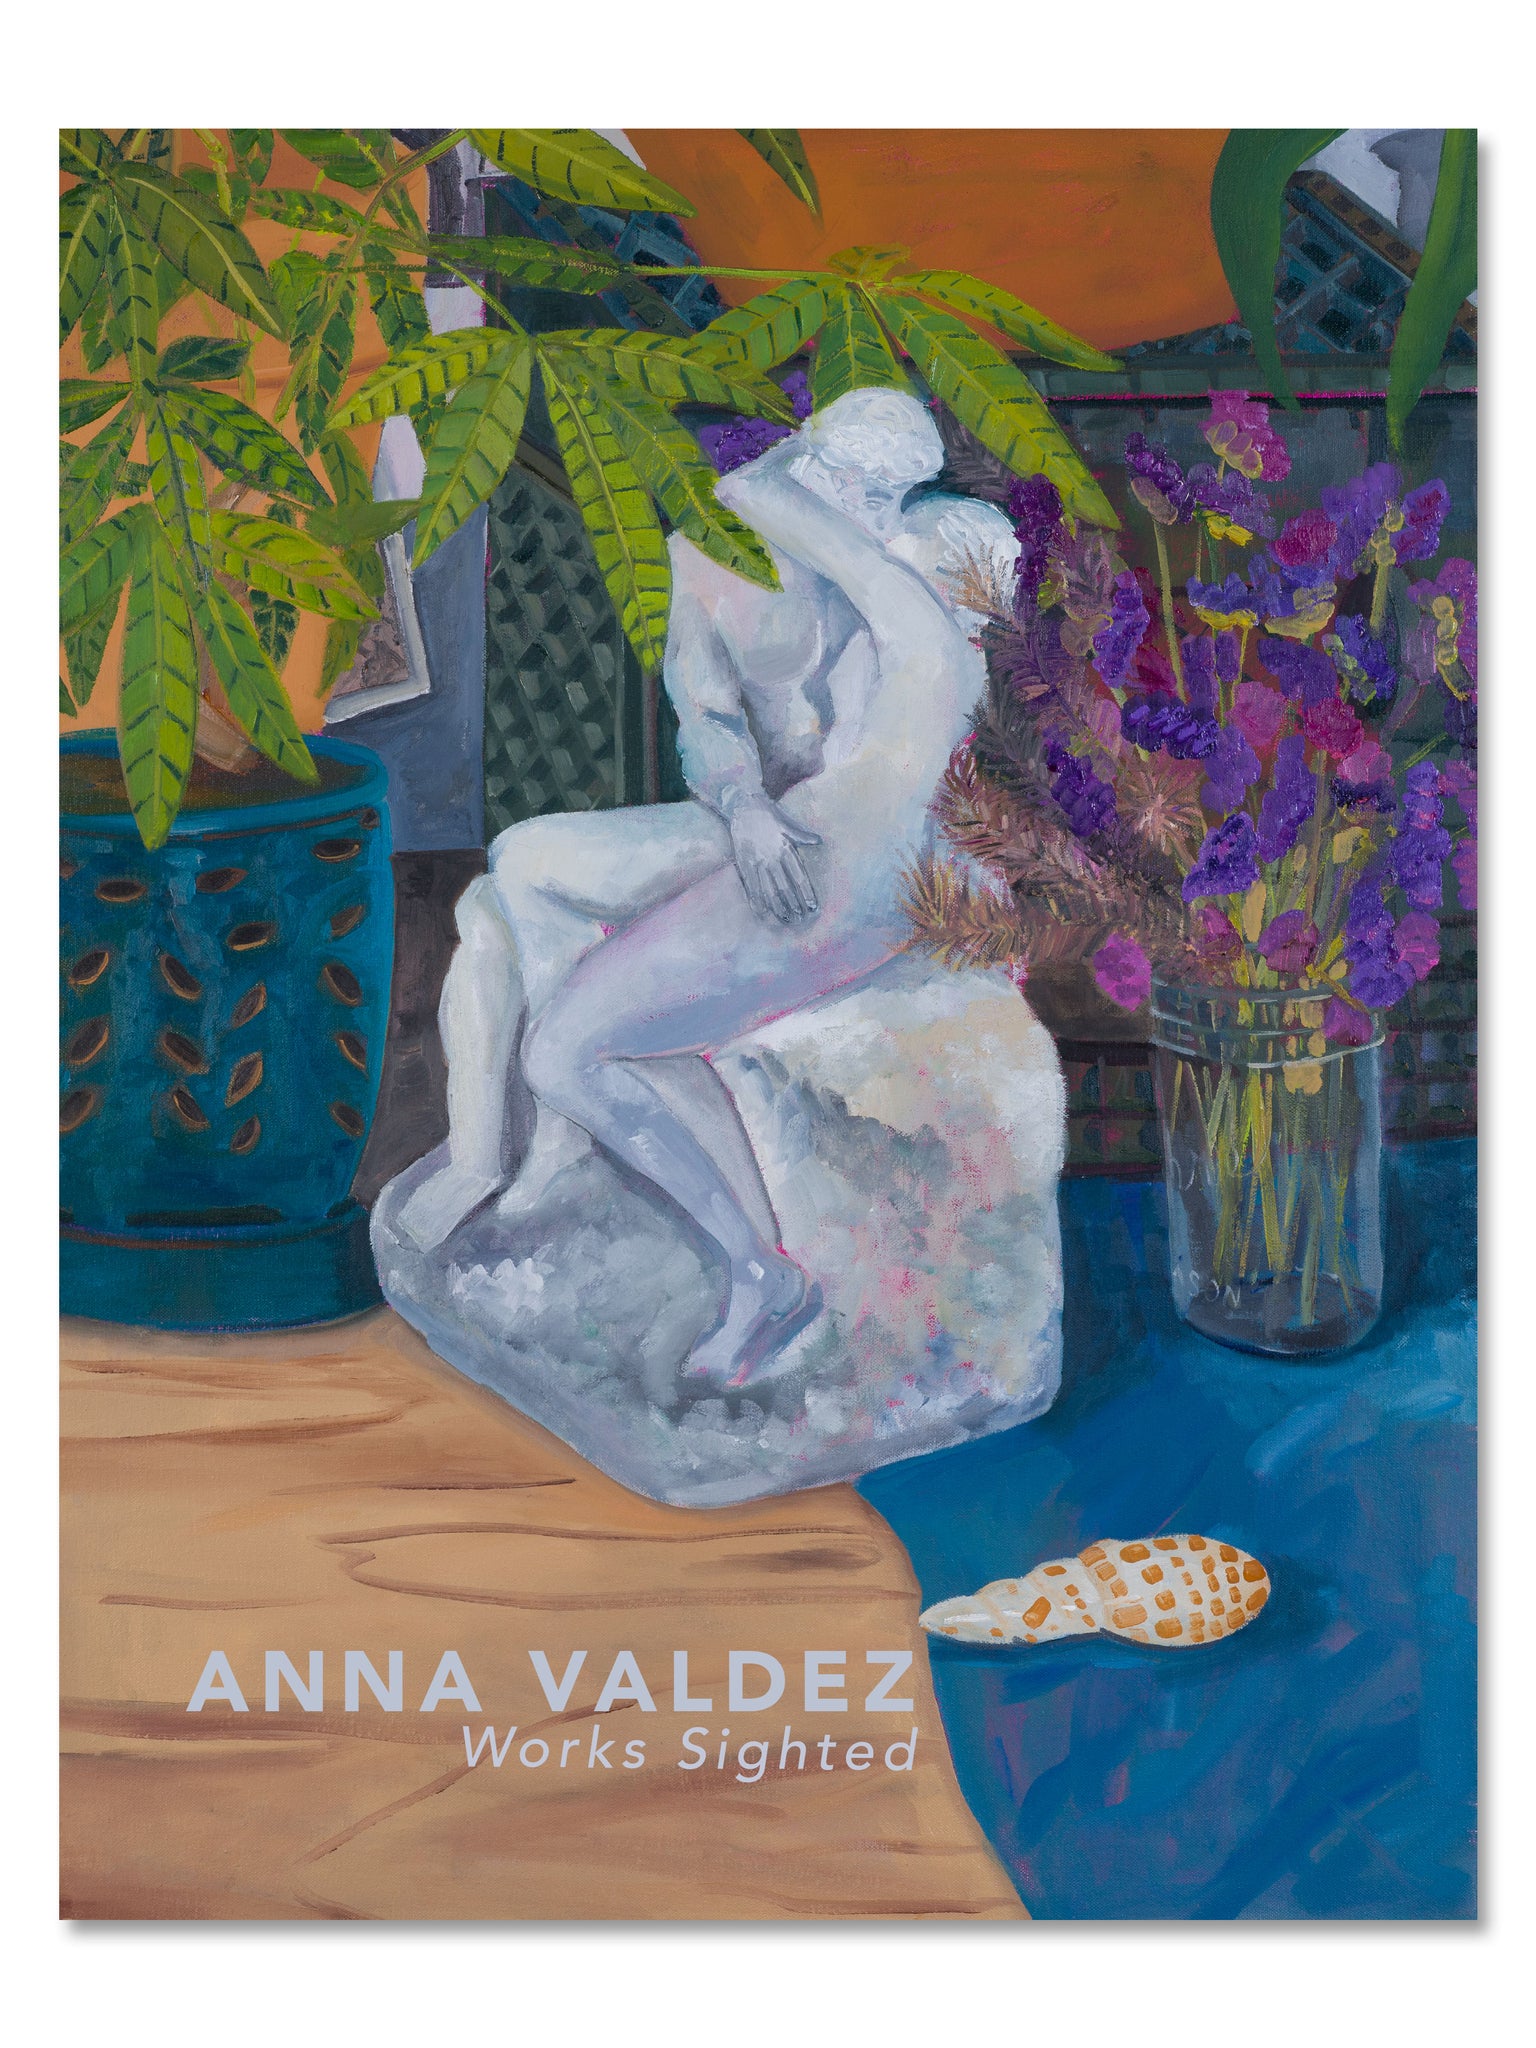 Anna Valdez - "Works Sighted" Catalog